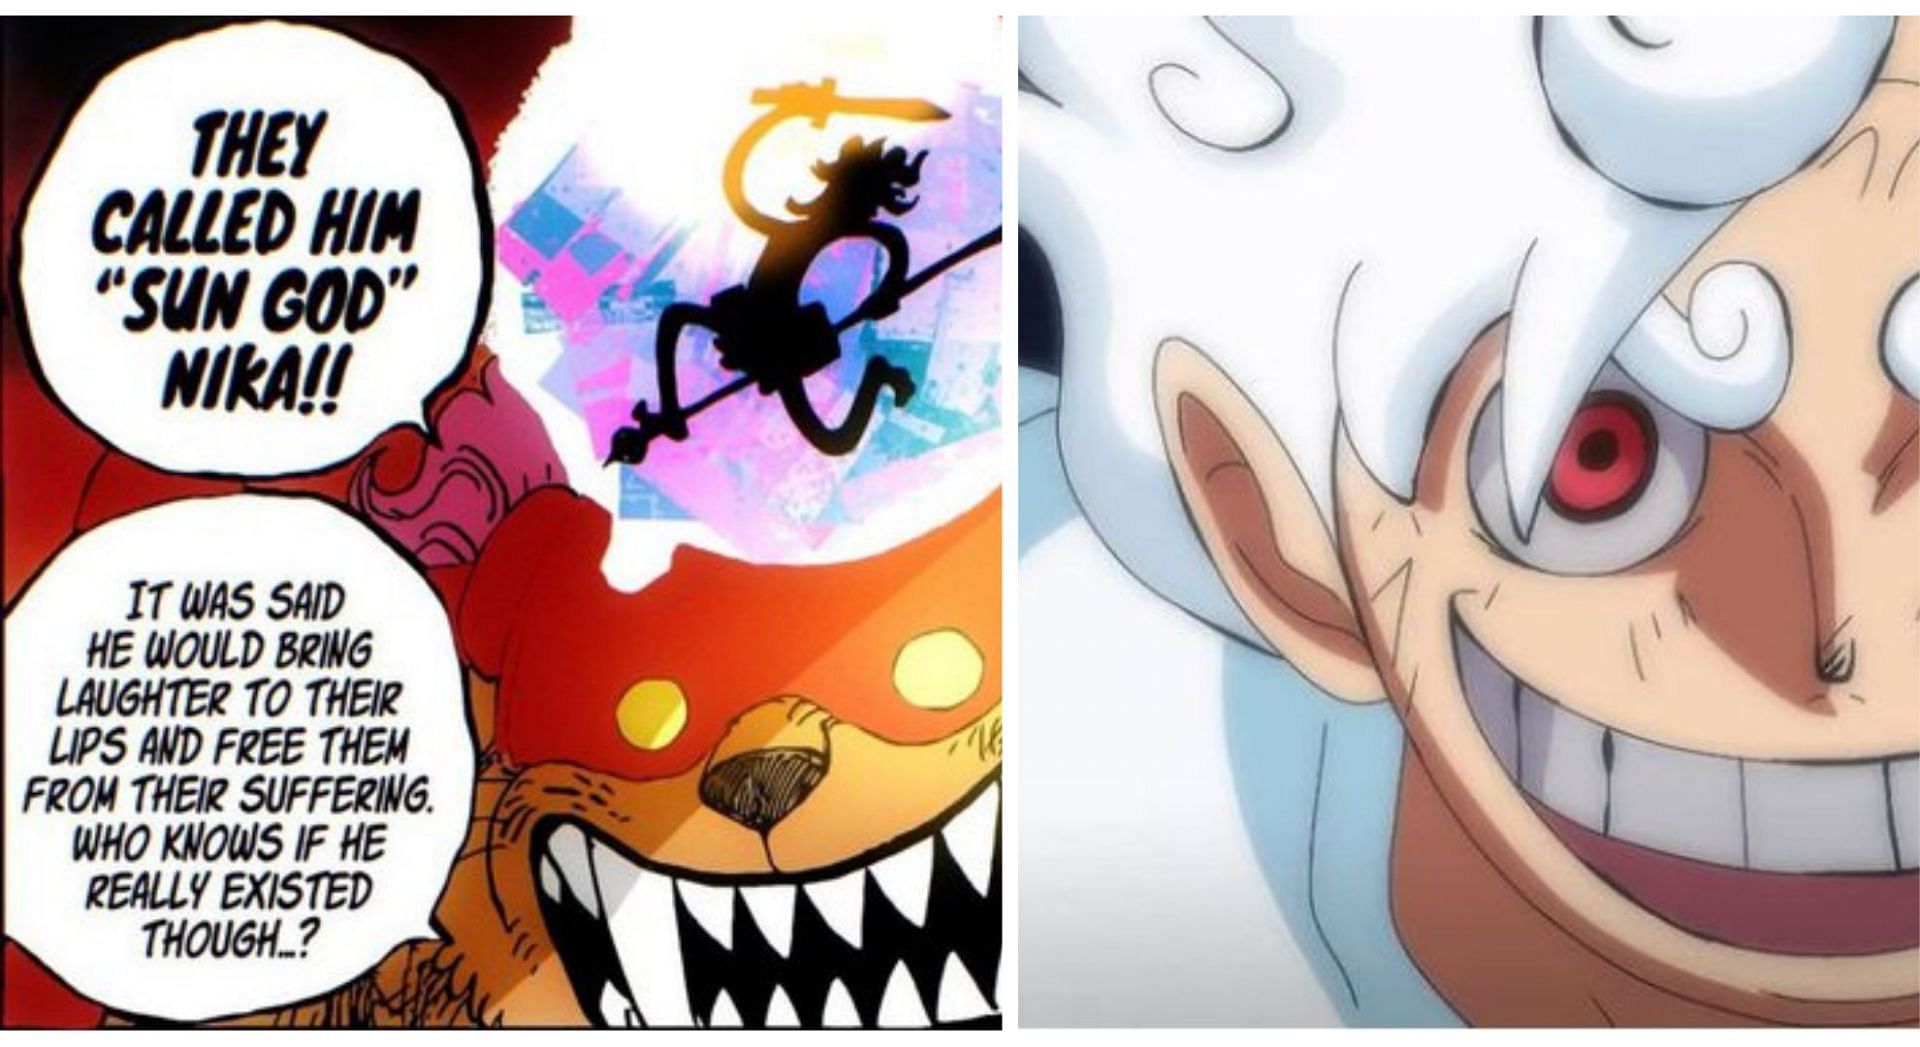 10 shonen anime characters like Makima from Chainsaw man who reincarnated